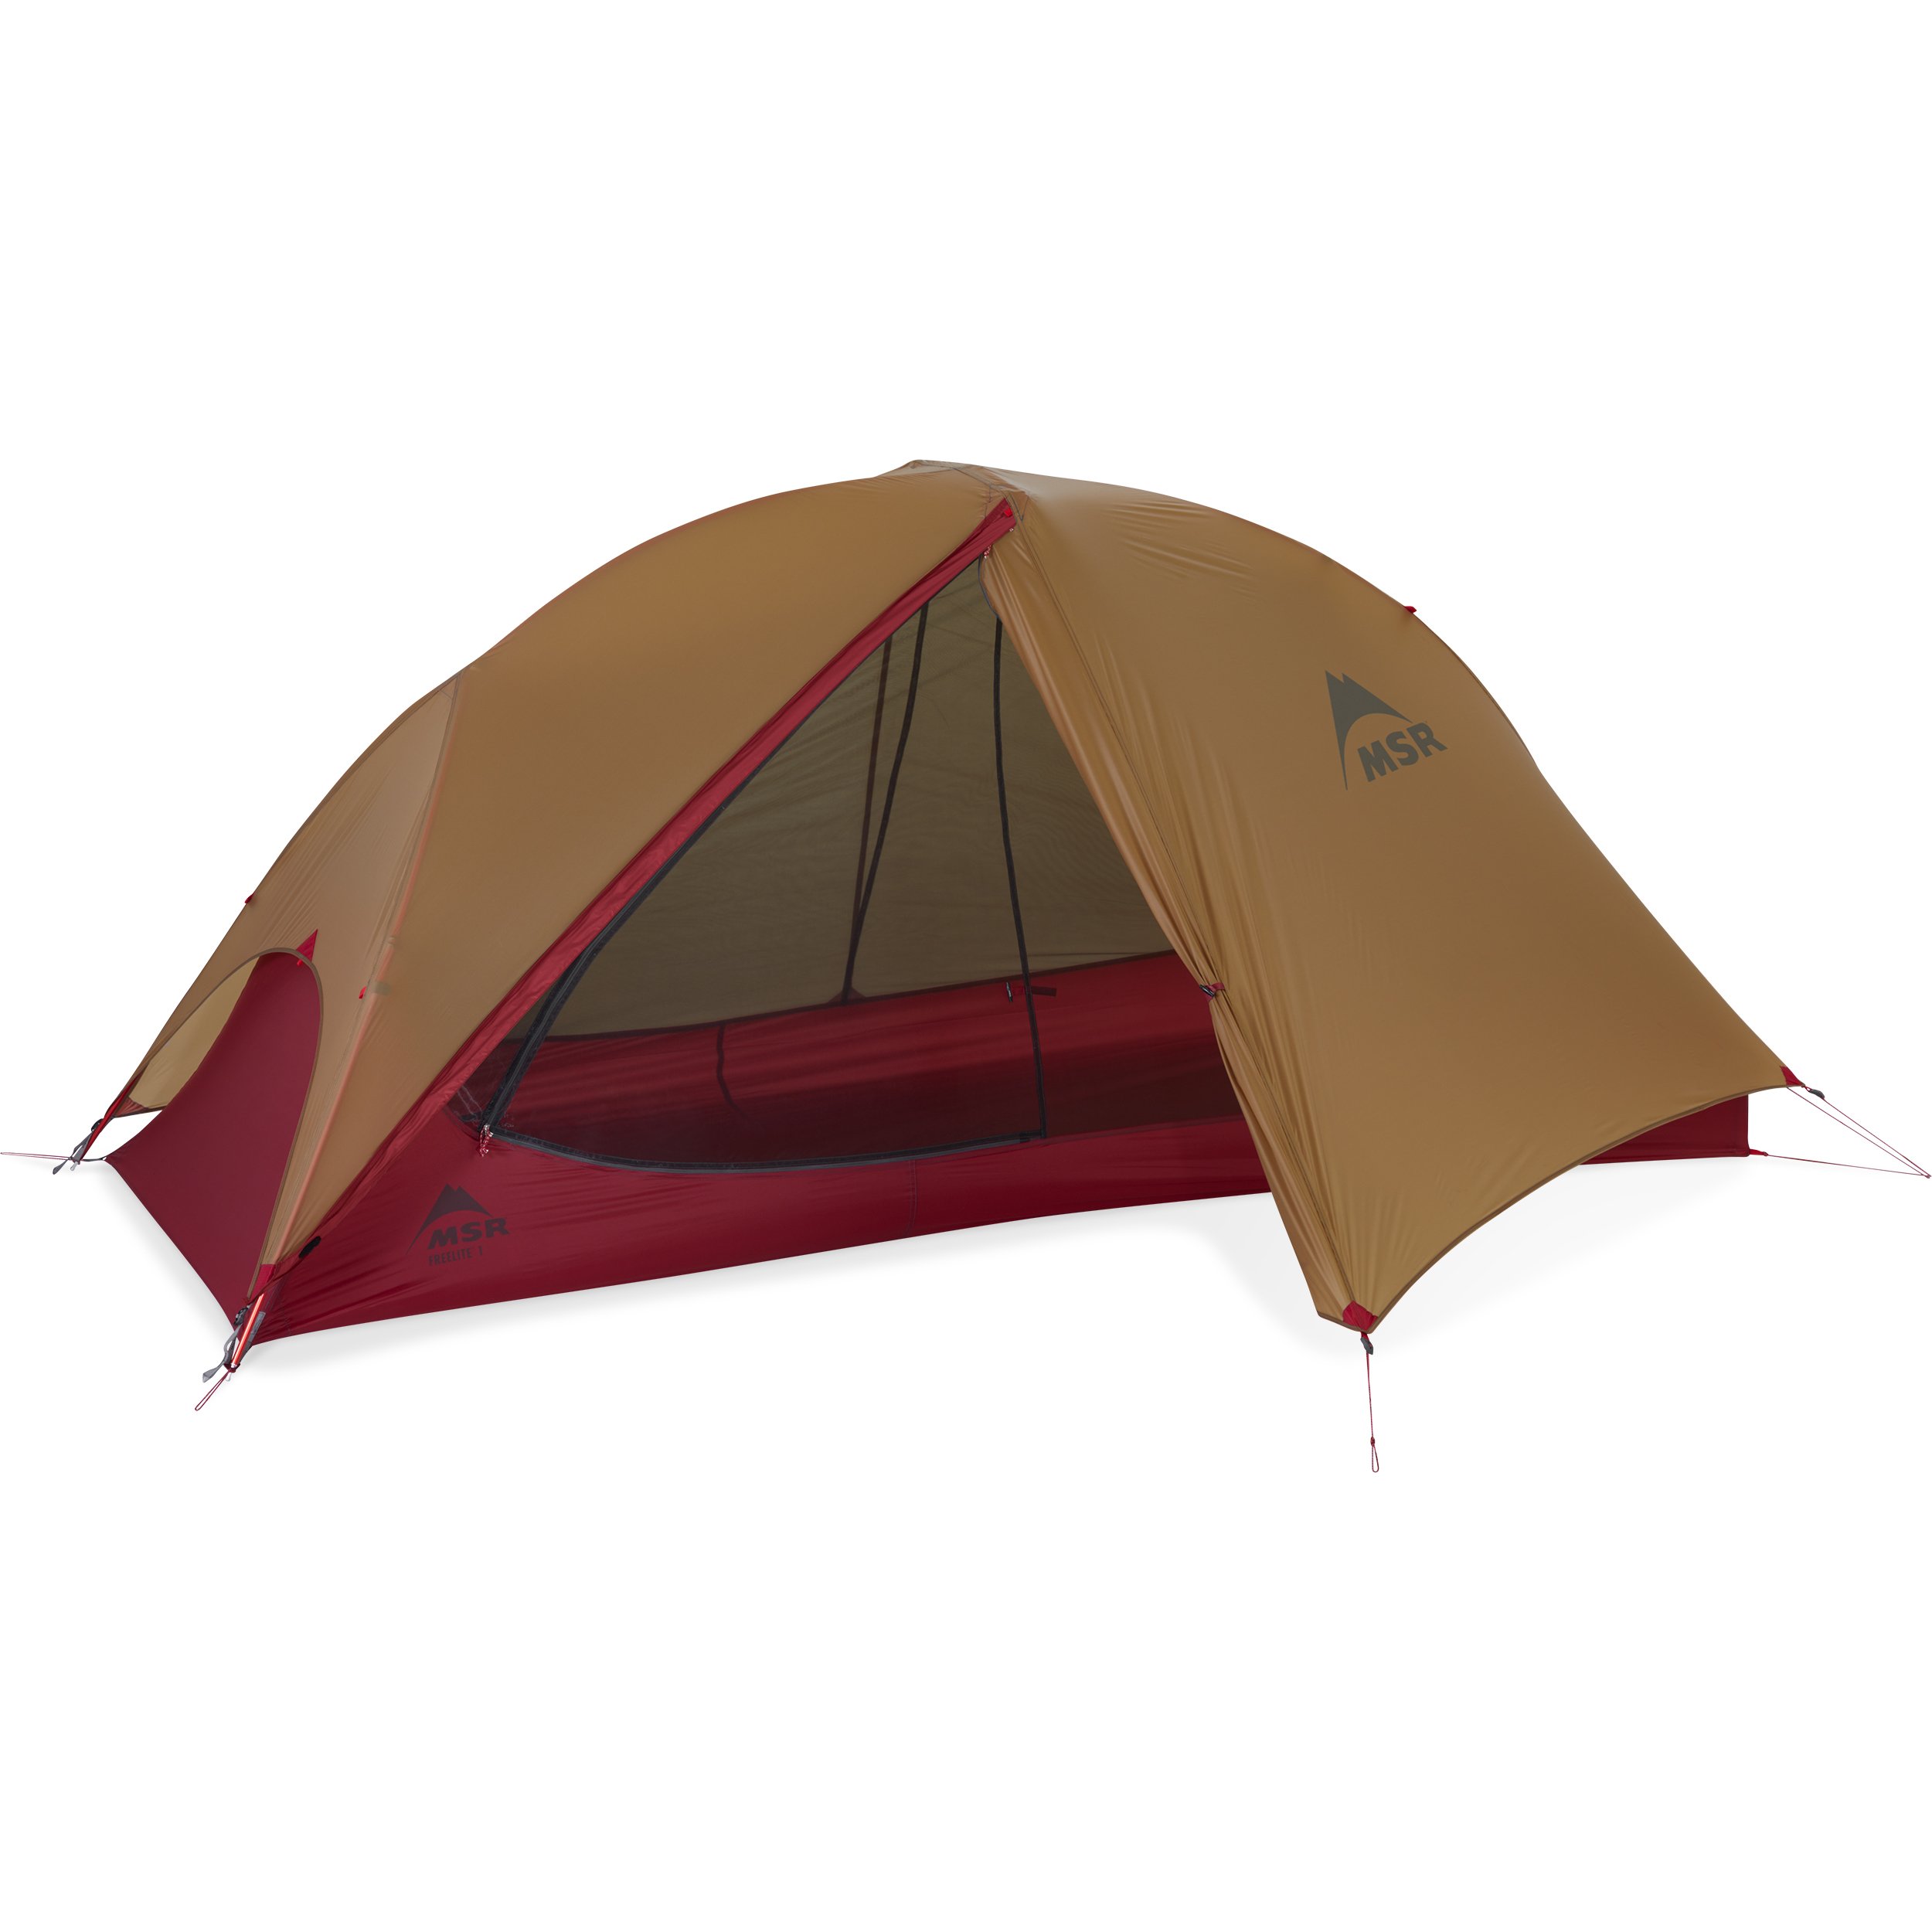 FreeLite™ 1 Ultrlaight 1-Person Backpacking Tent | MSR®